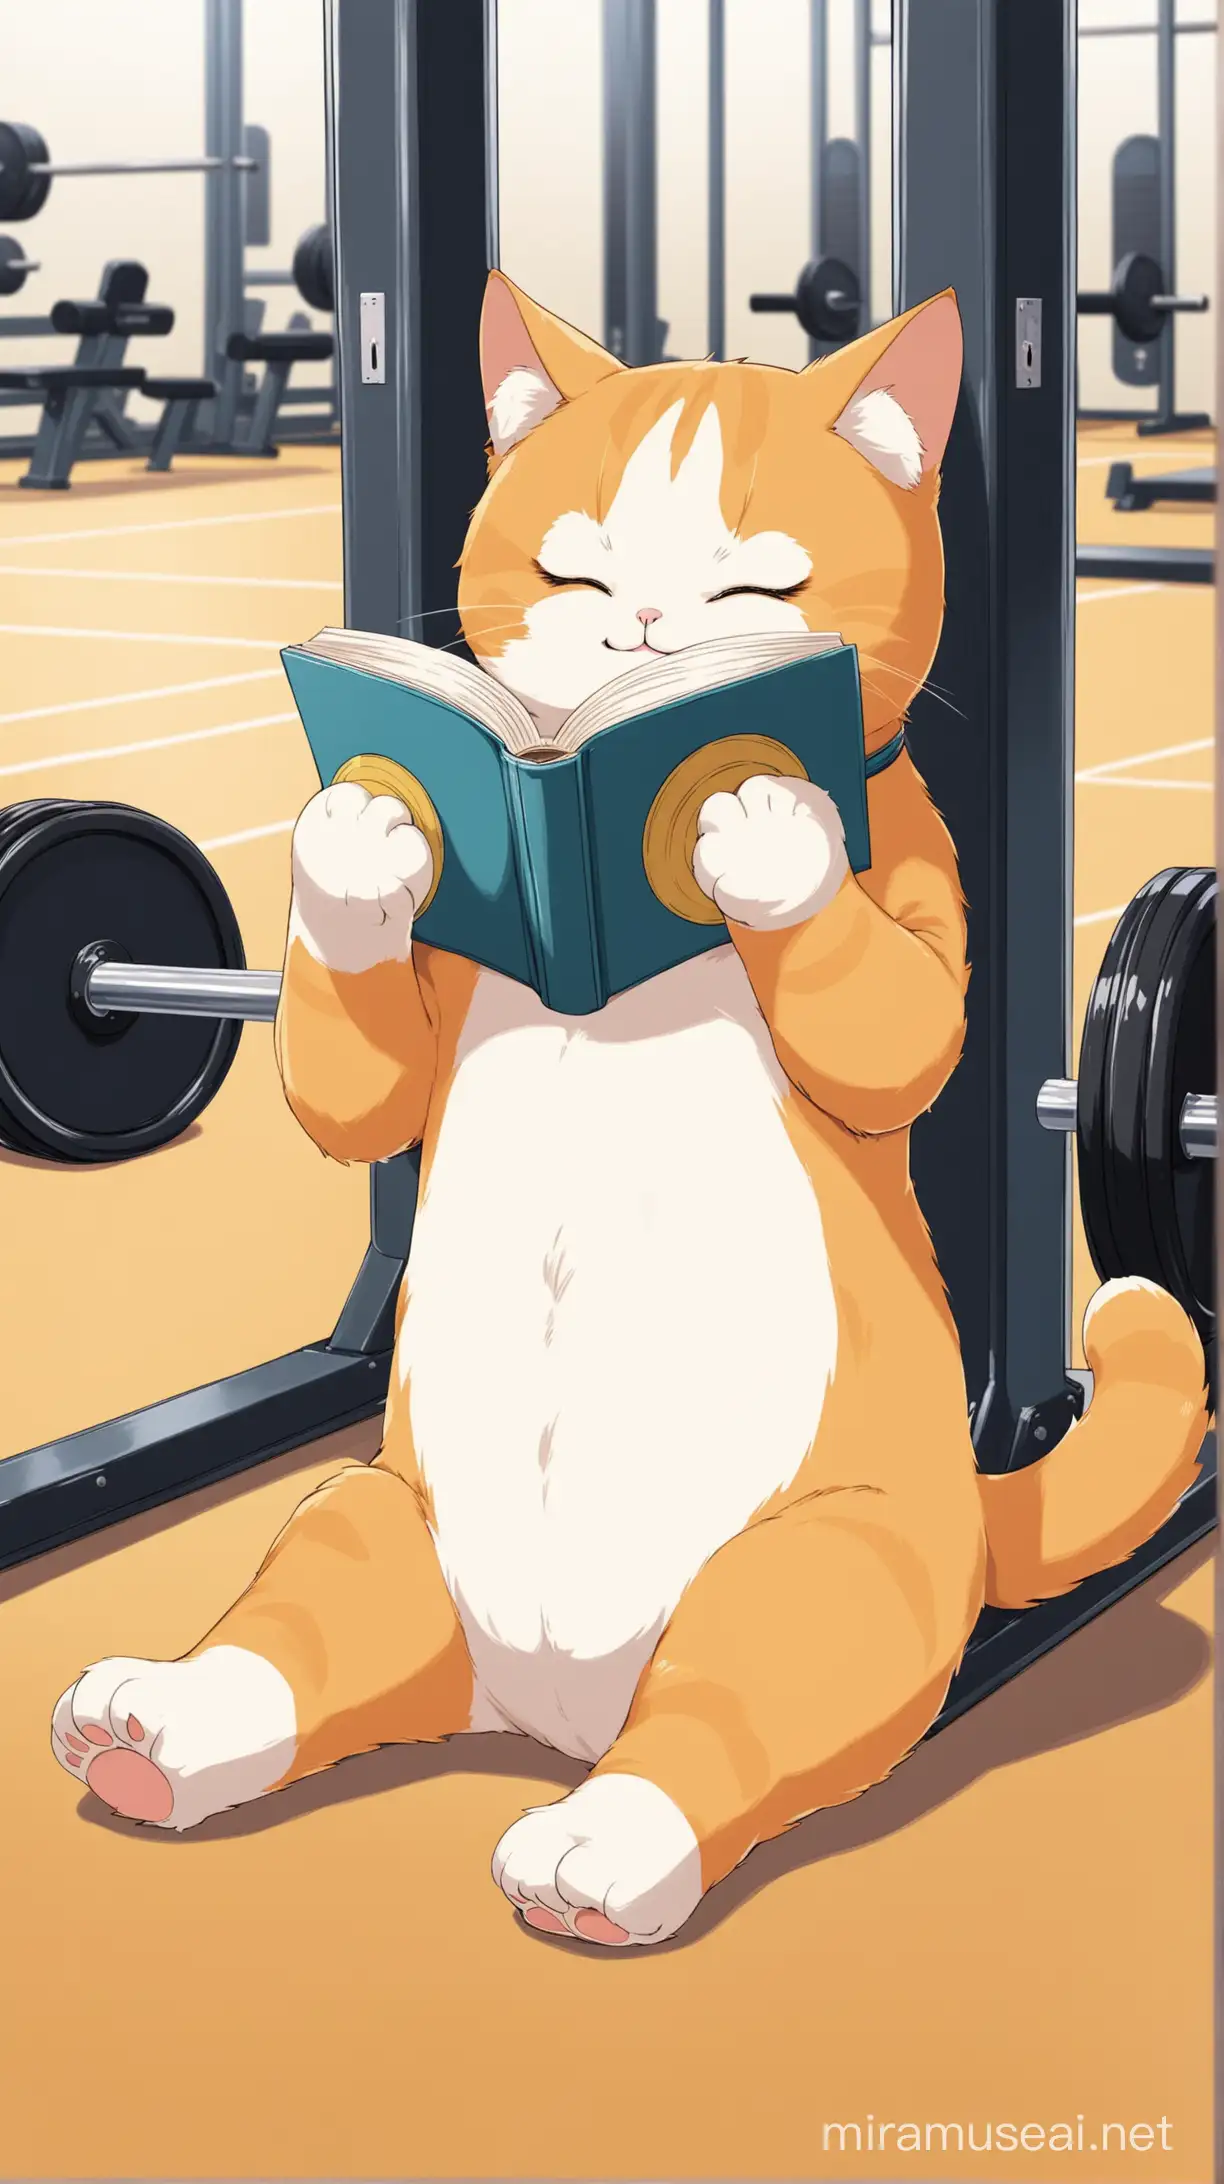 Feline Enthusiast Enjoying Manga in a Fitness Center